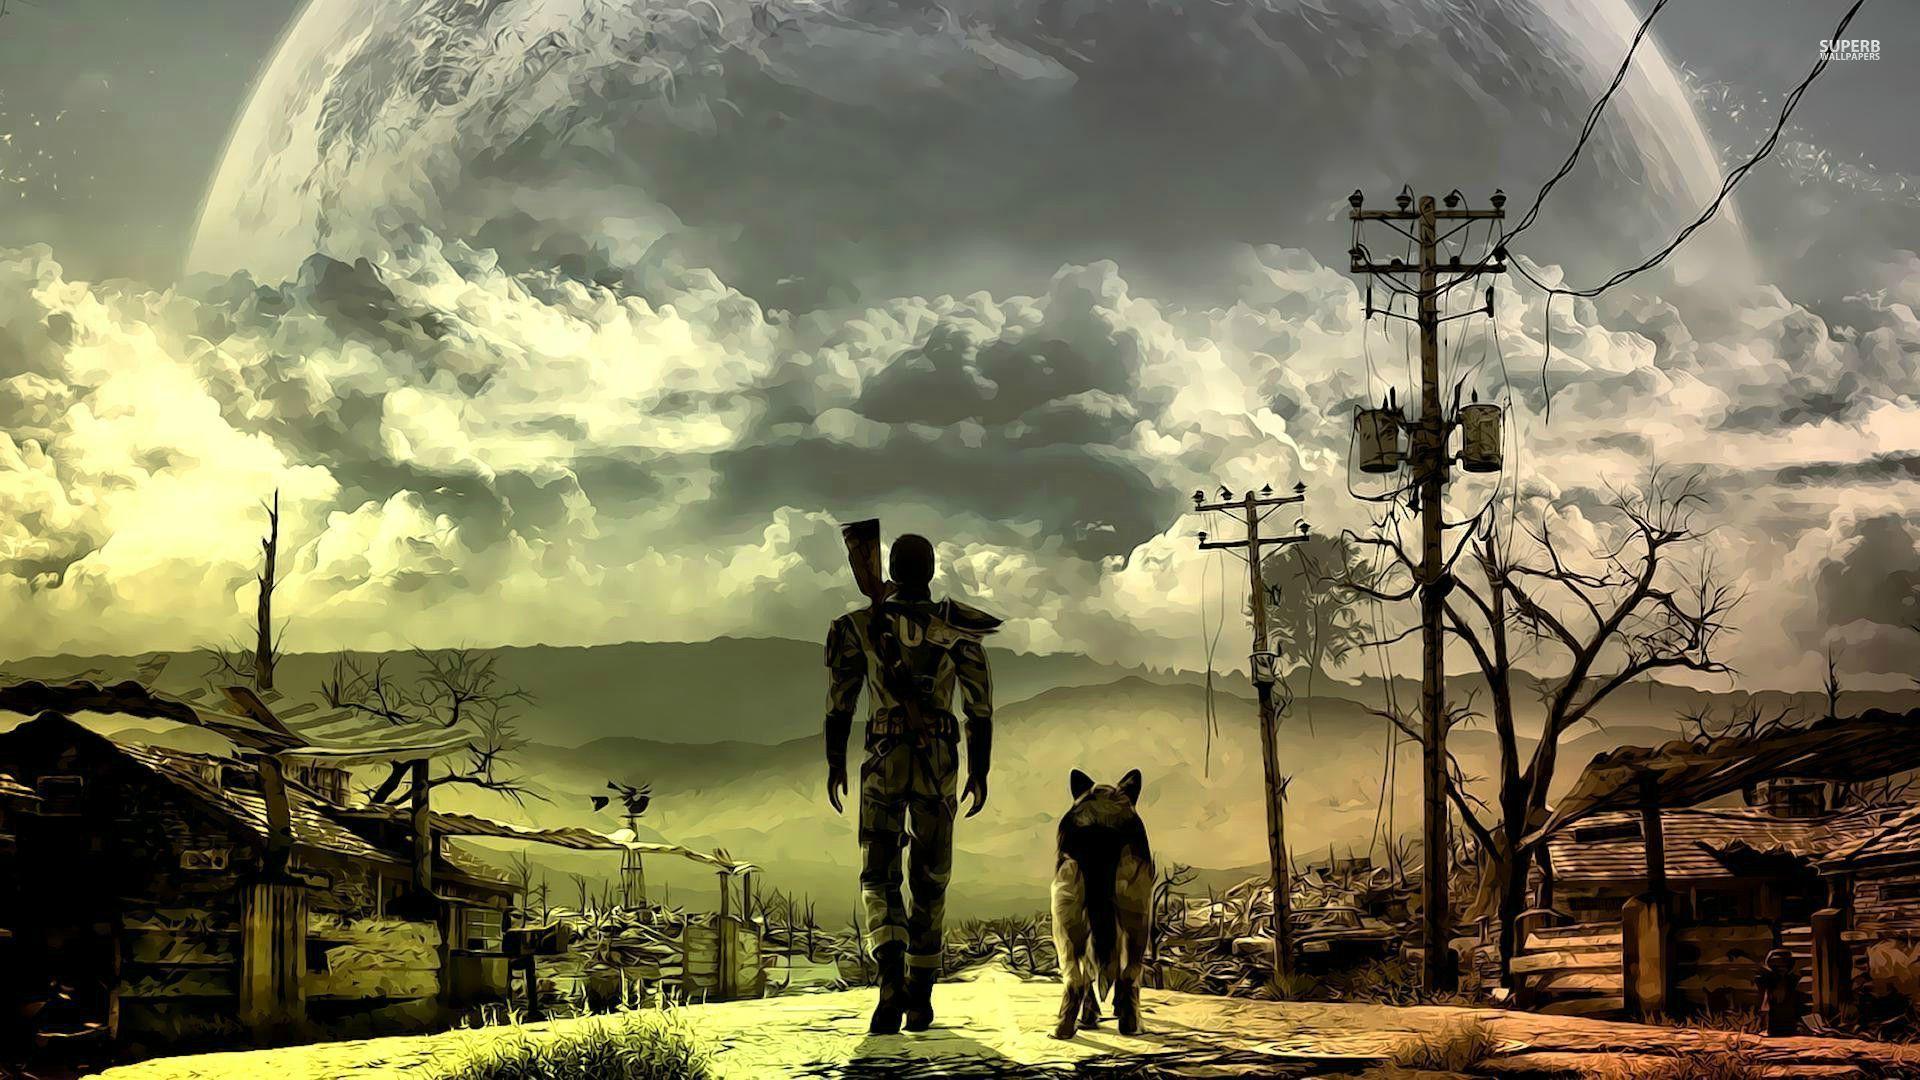 1920 x 1080 · jpeg - Fallout 4 Wallpaper 1920x1080 - WallpaperSafari